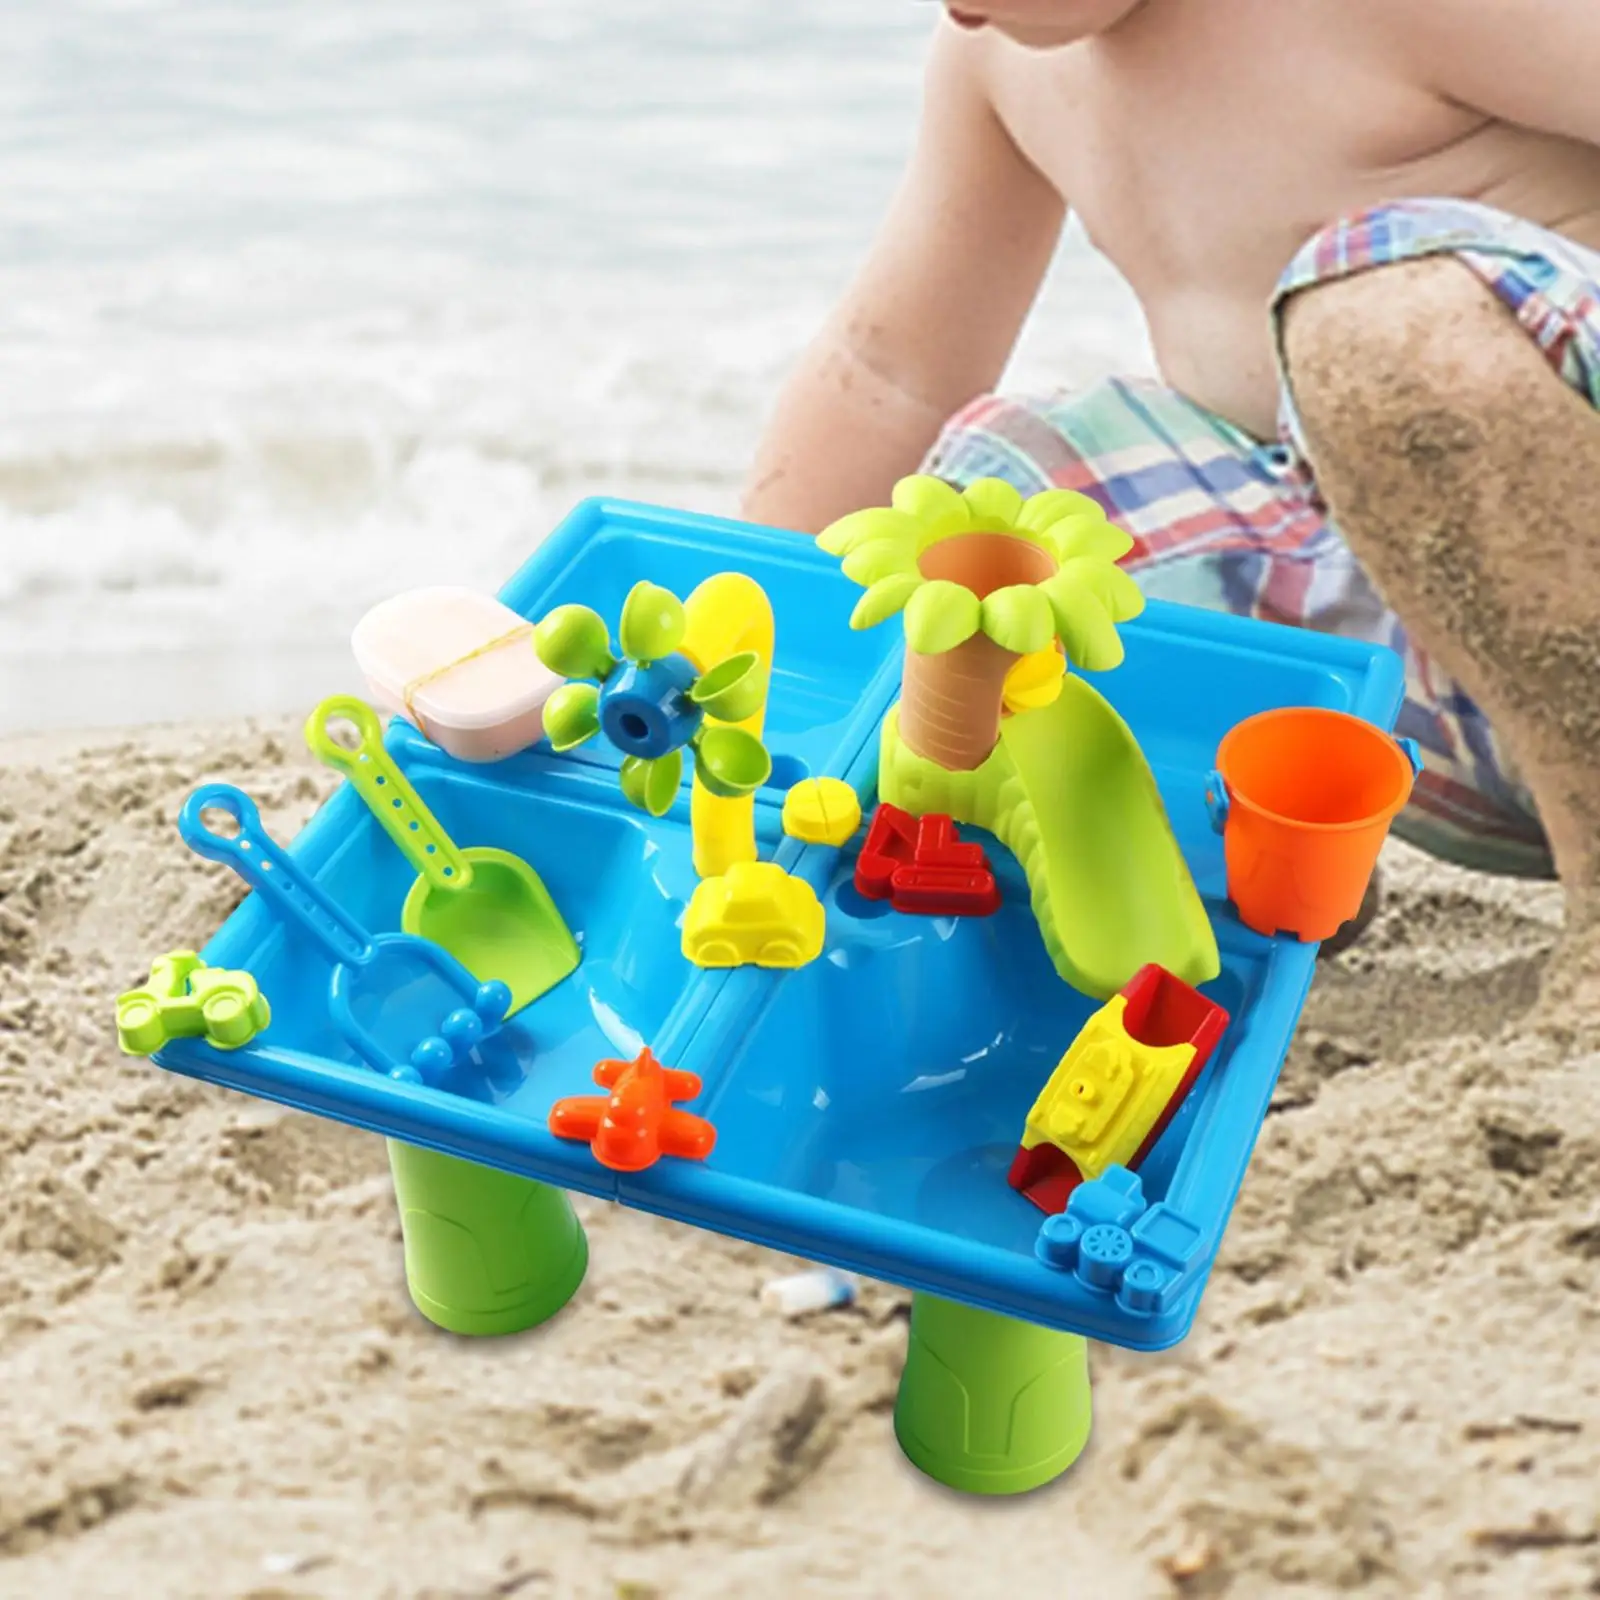 24Pcs Summer Water Table Activity Outdoor Backyard Beach Sandbox Table Playset for Toddler Children Kids Girls Boys Gifts